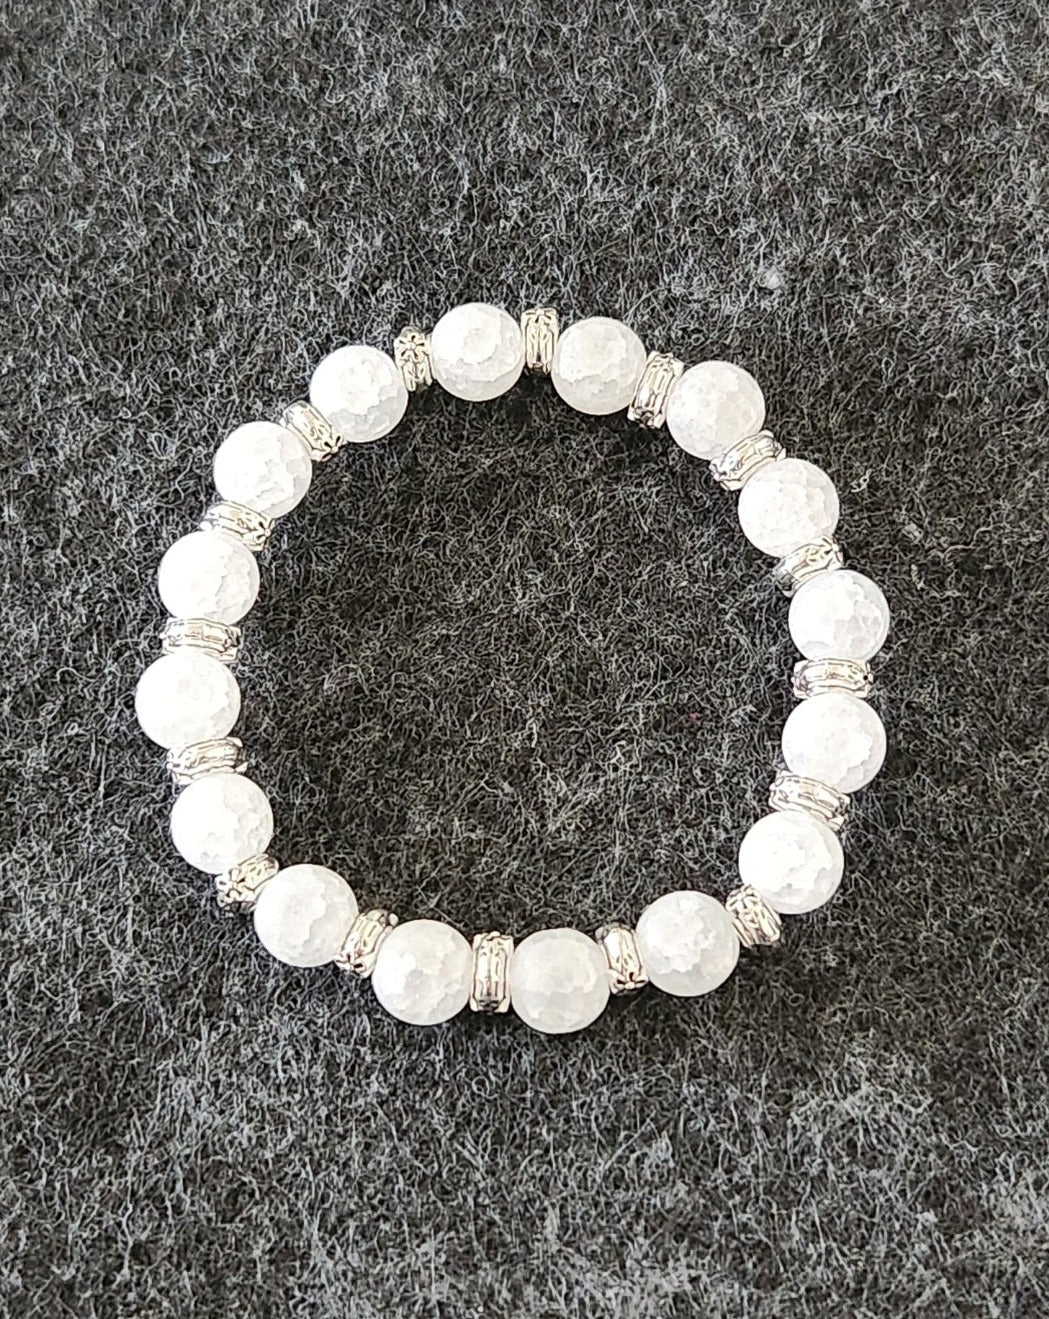 White Crackle Quartz Stone beaded bracelet with accents - harmony - spiritual light - wisdom - growth